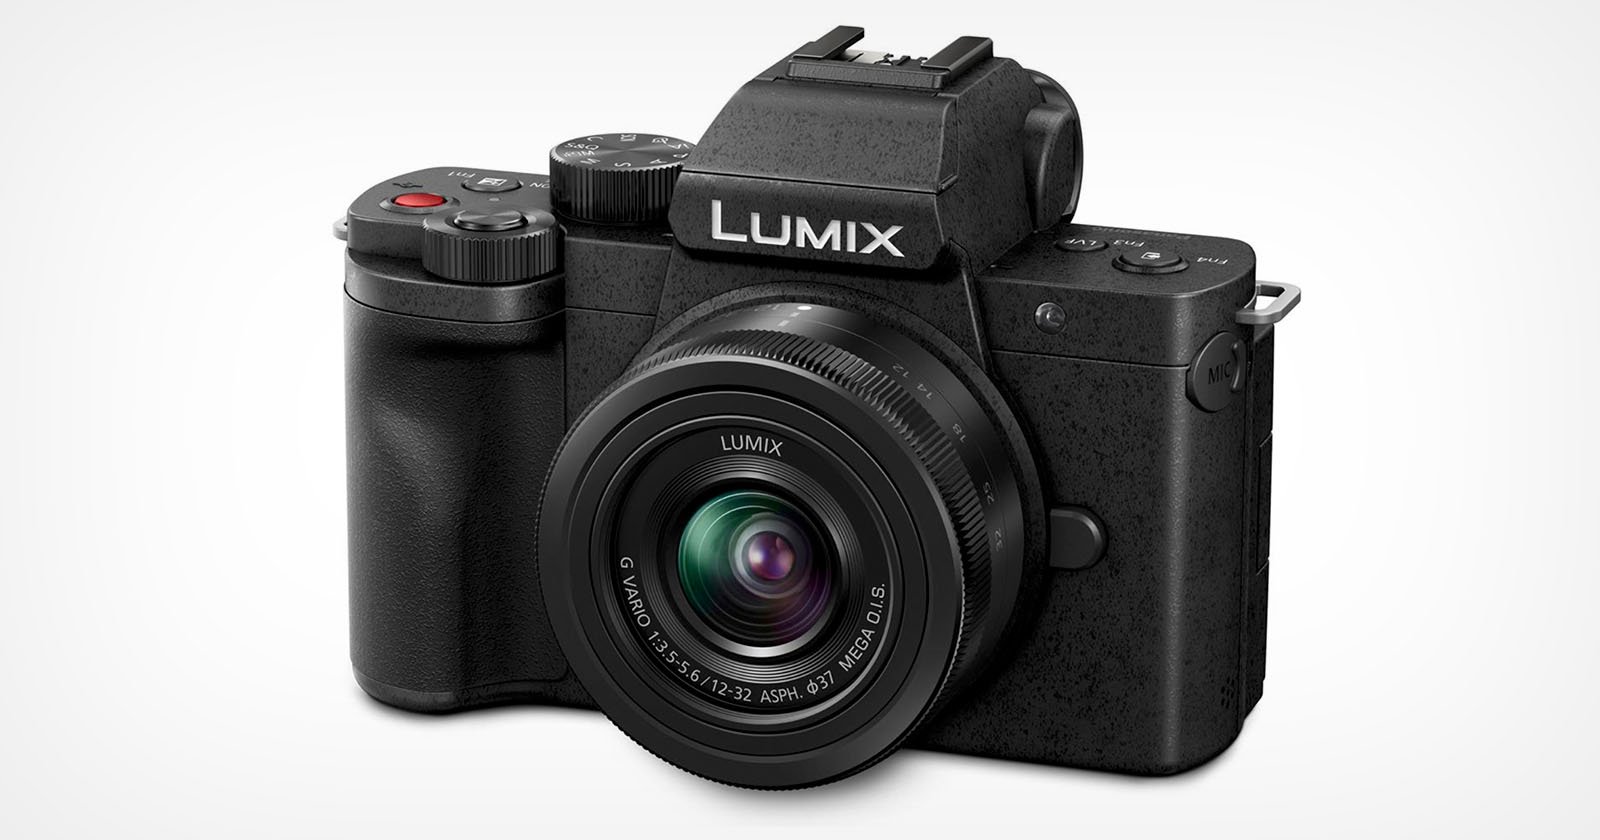  panasonic lumix g100d camera upgrades evf 